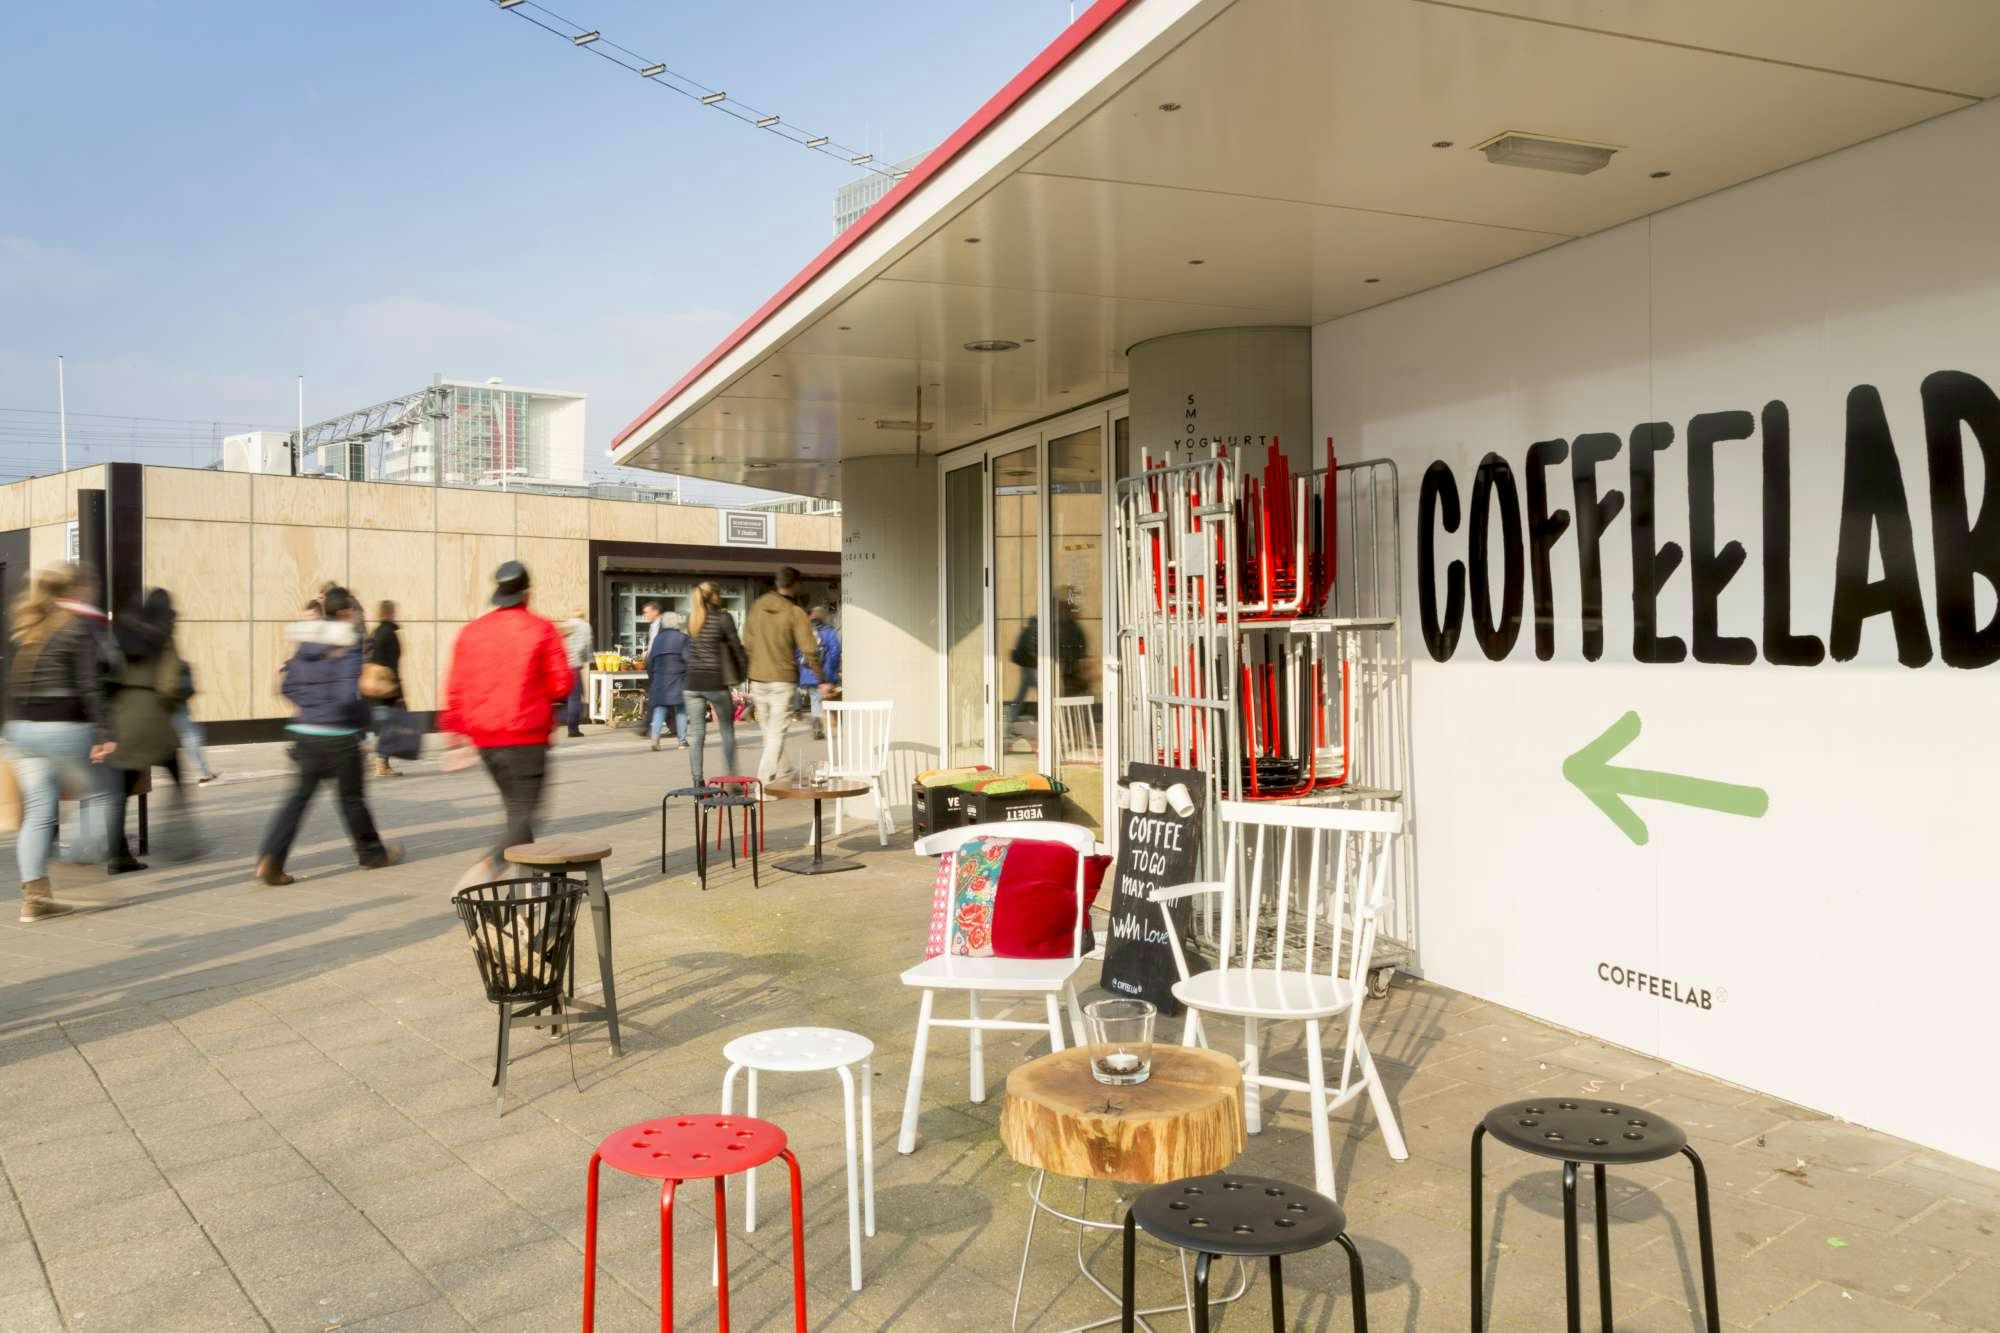 Oervestiging Coffeelab in Eindhoven sluit permanent